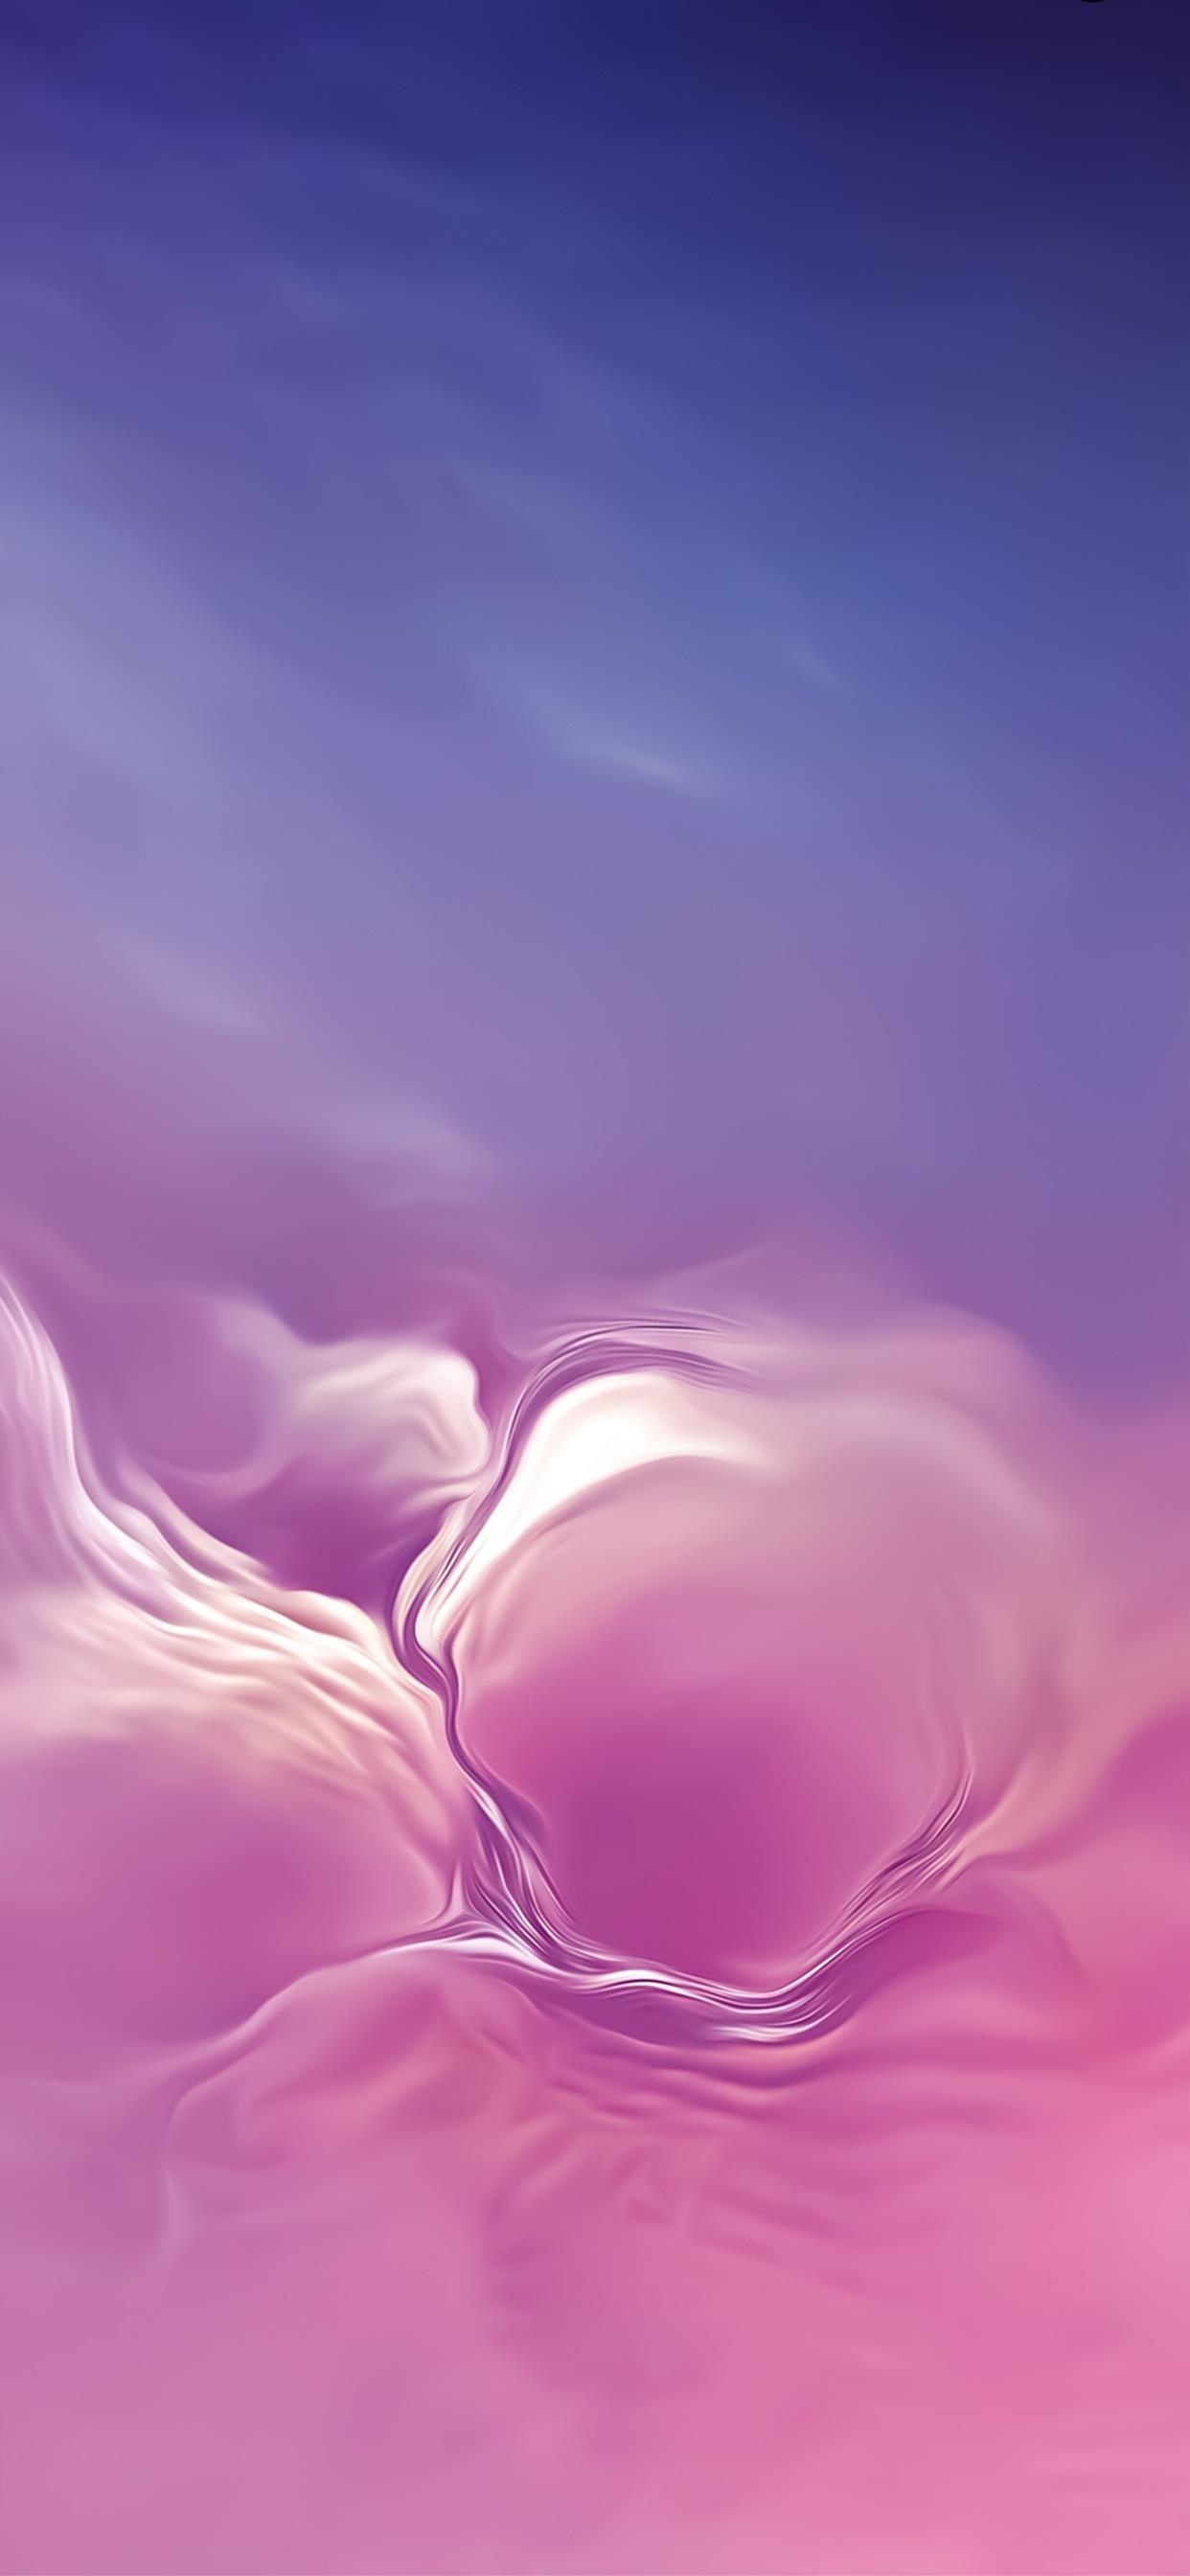 samsung galaxy wallpaper,rosado,cielo,púrpura,violeta,pétalo